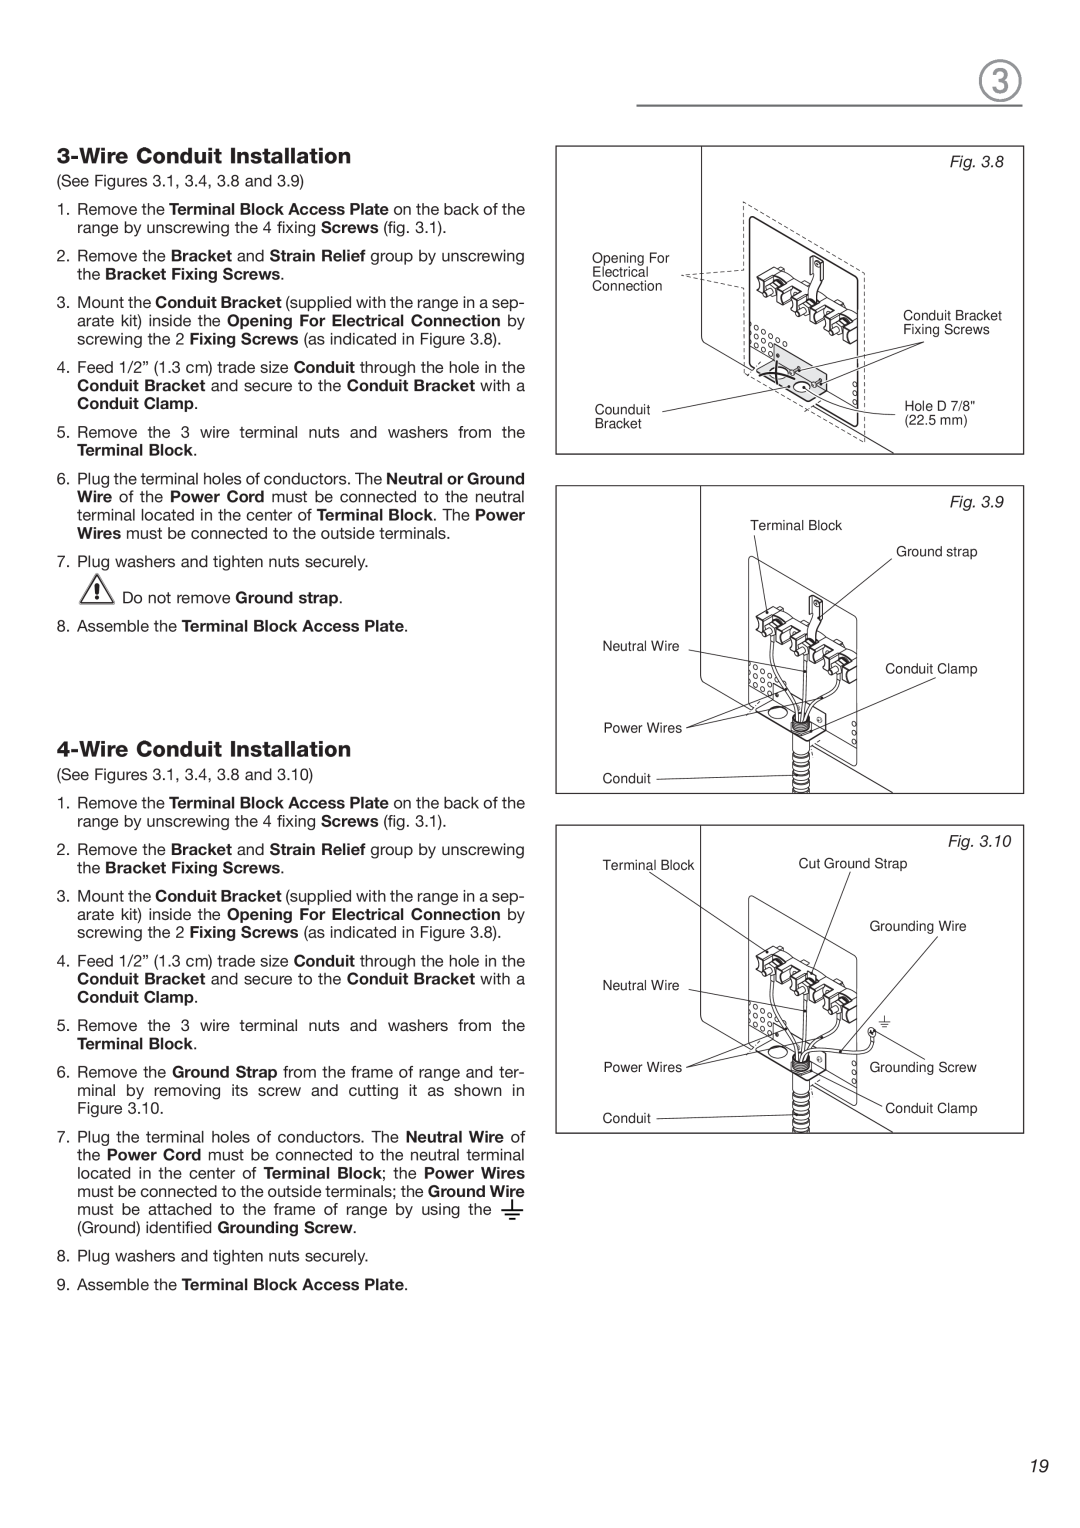 DeLonghi DEGESC24SS installation instructions Wire Conduit Installation, Assemble the Terminal Block Access Plate 